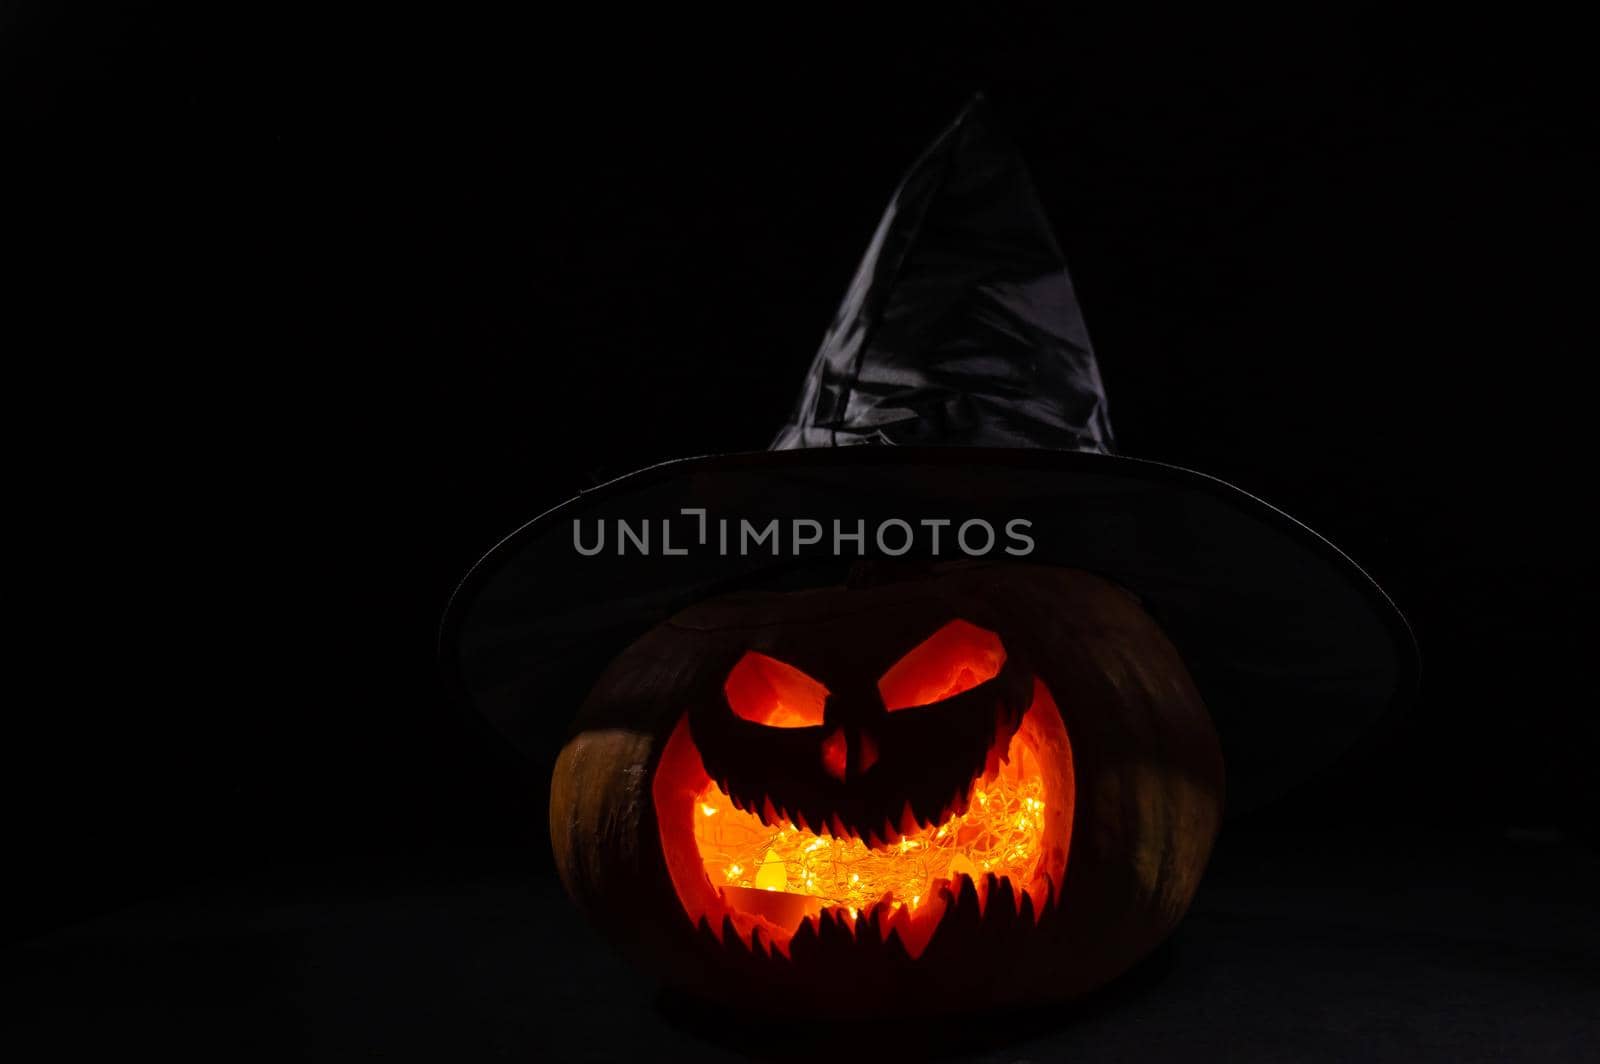 Glowing pumpkin in a witch hat in the dark. Jack o lantern. by mrwed54